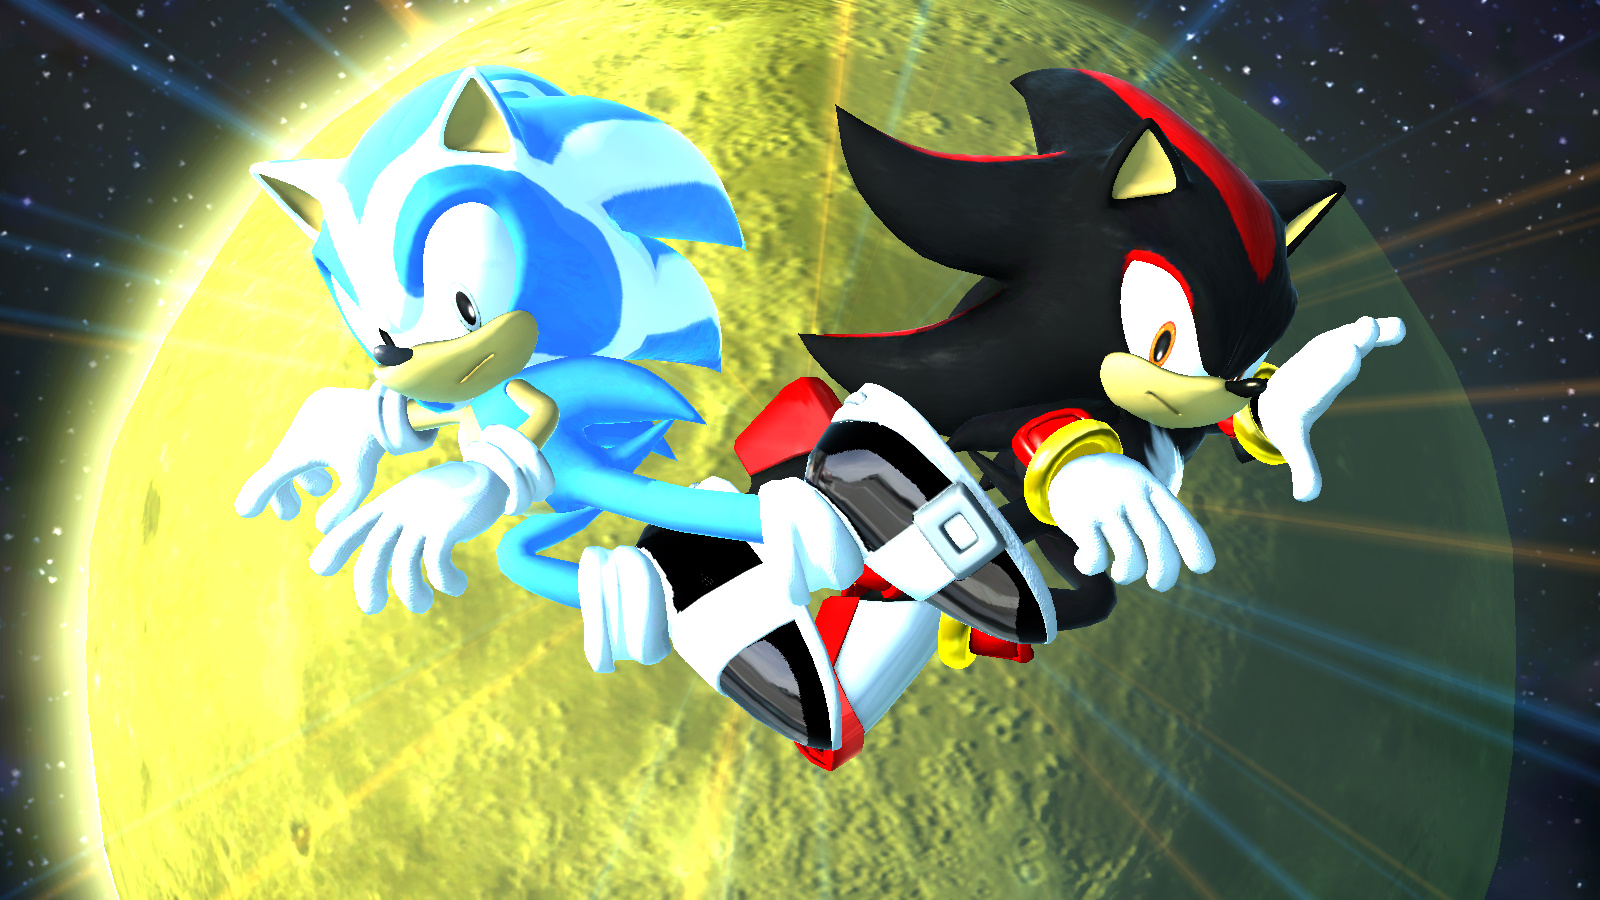 Image 2 - Soner the hedgehog mod for Sonic Generations.